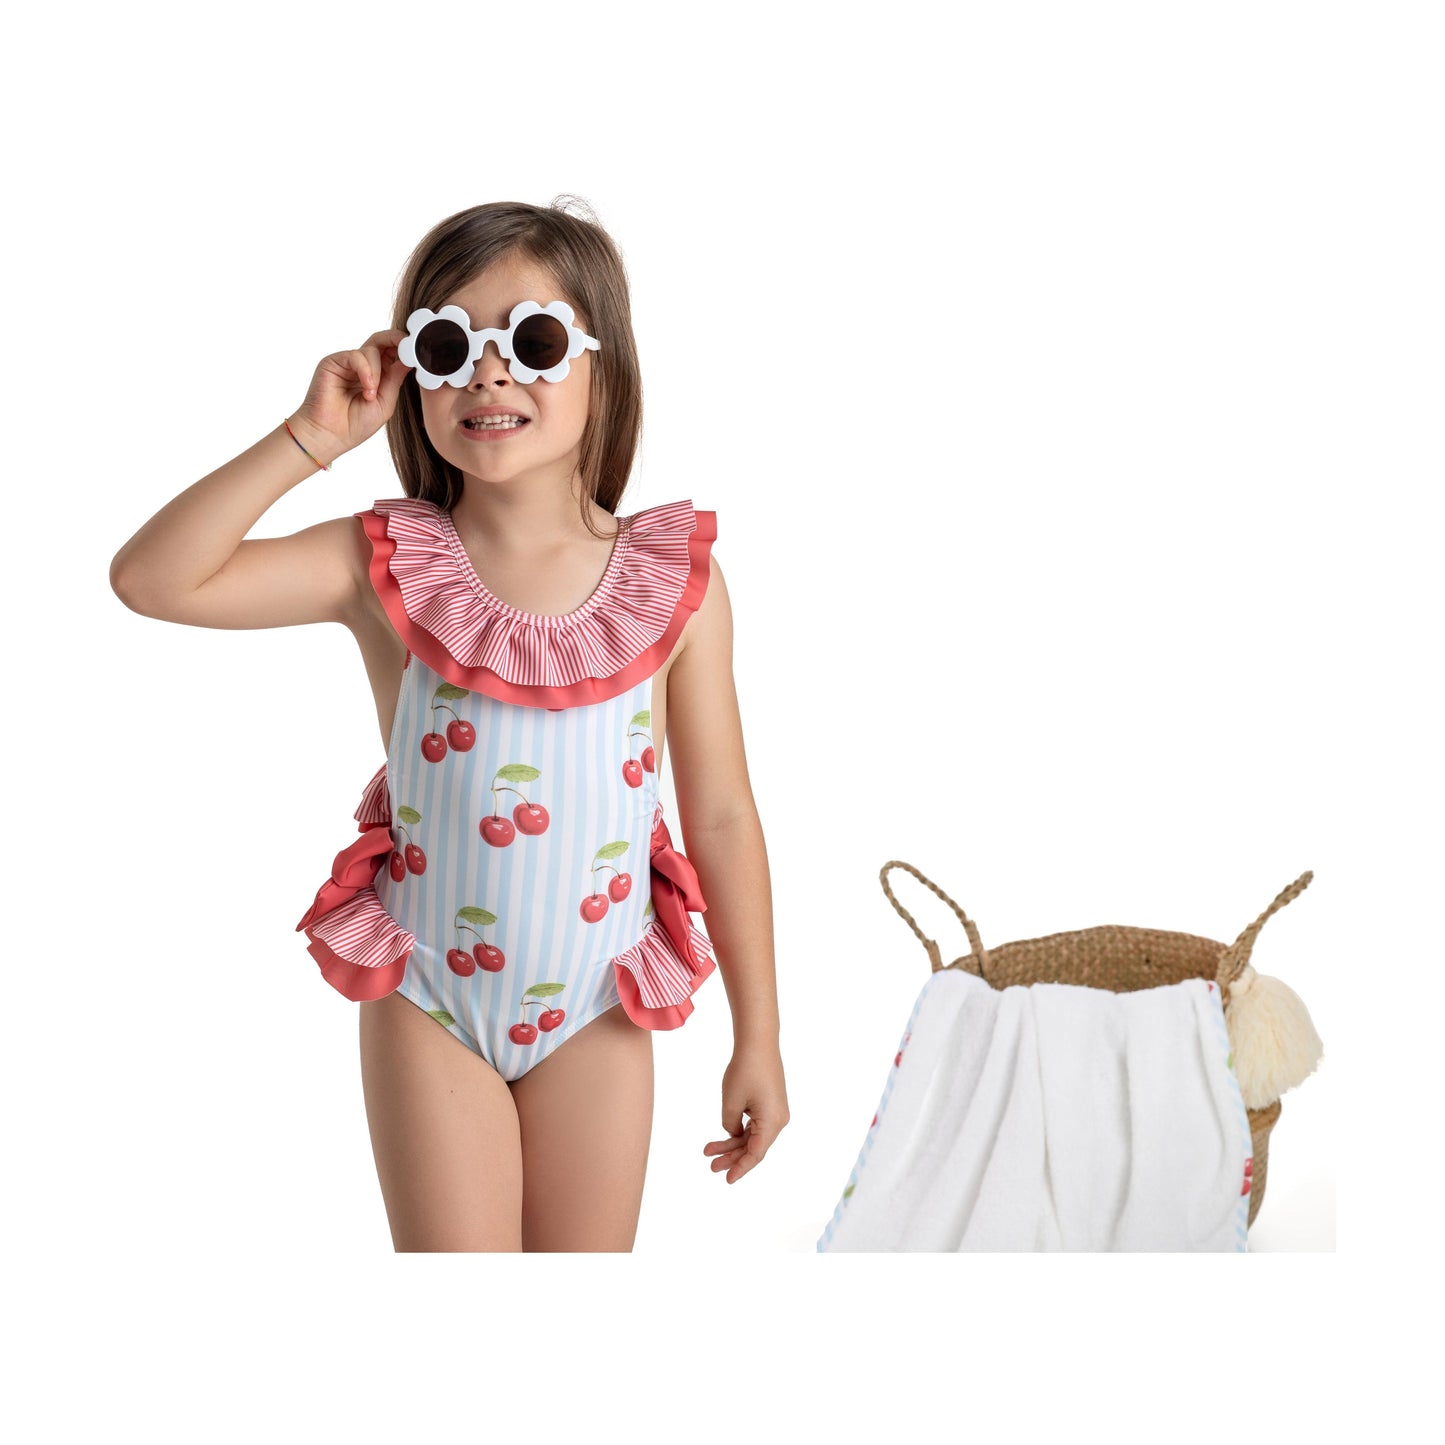 Cherries swim costume for girls by Meia Pata - Adora